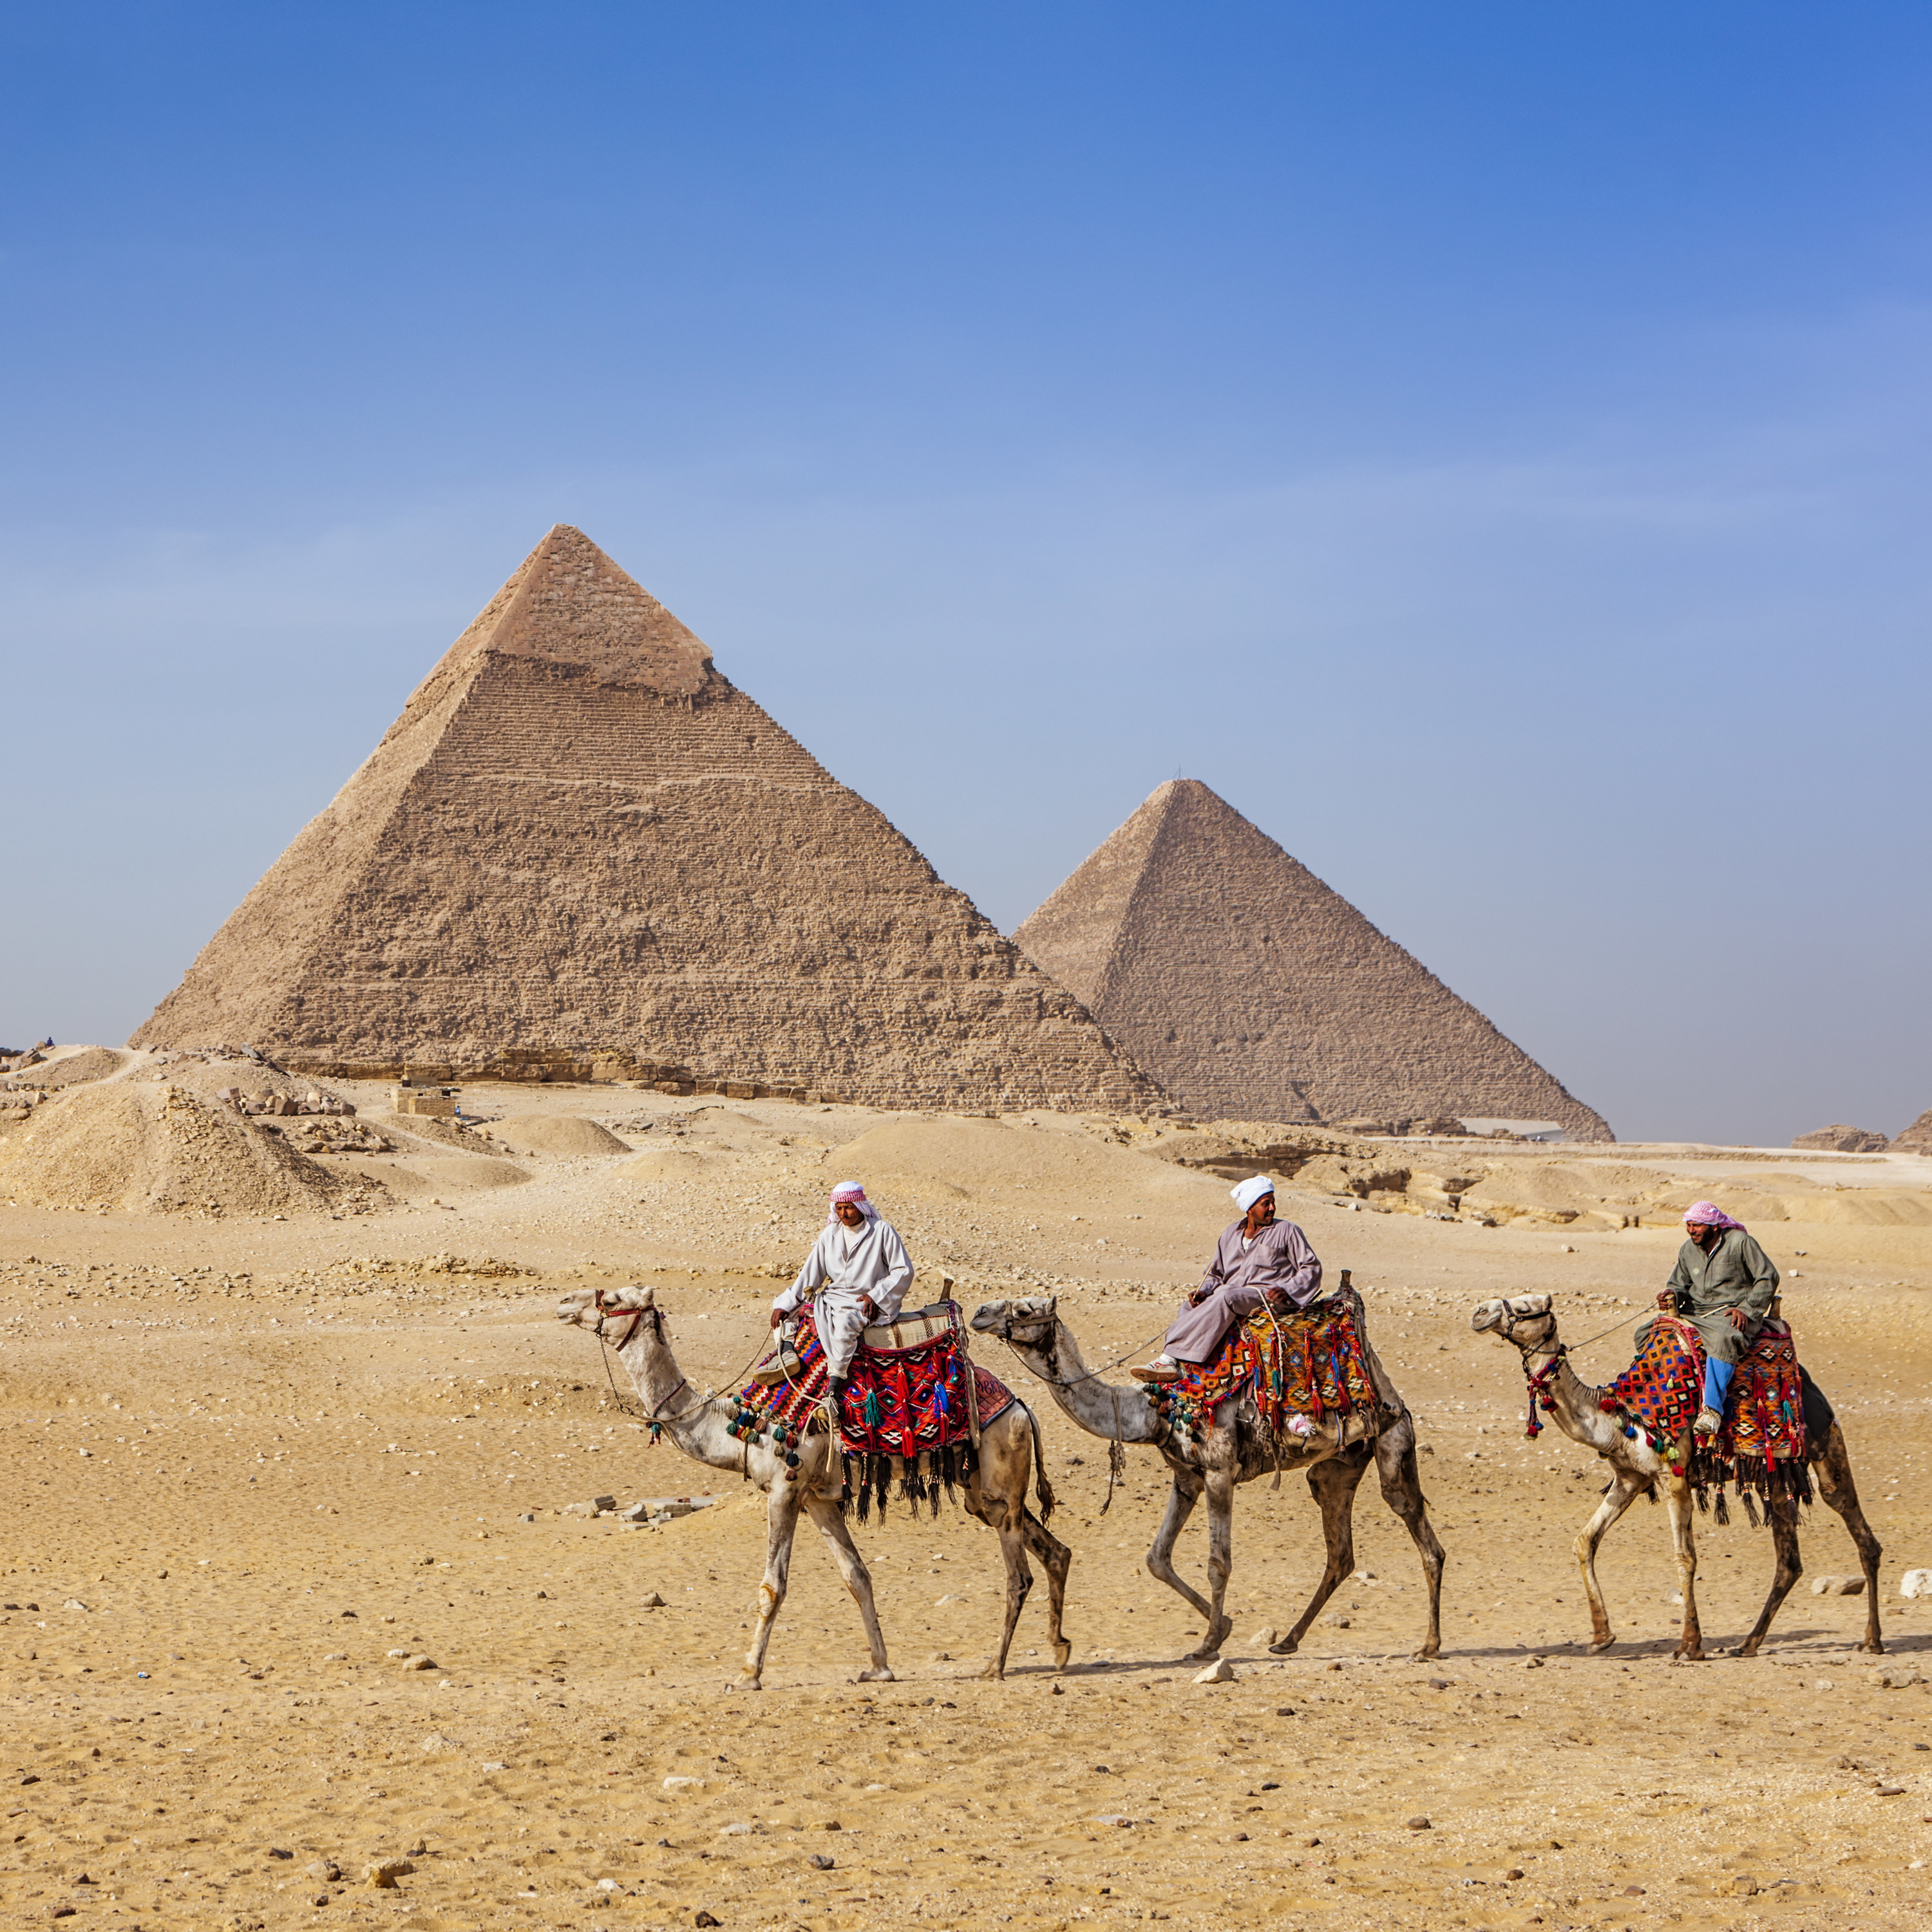 pyramids of giza, camel riders